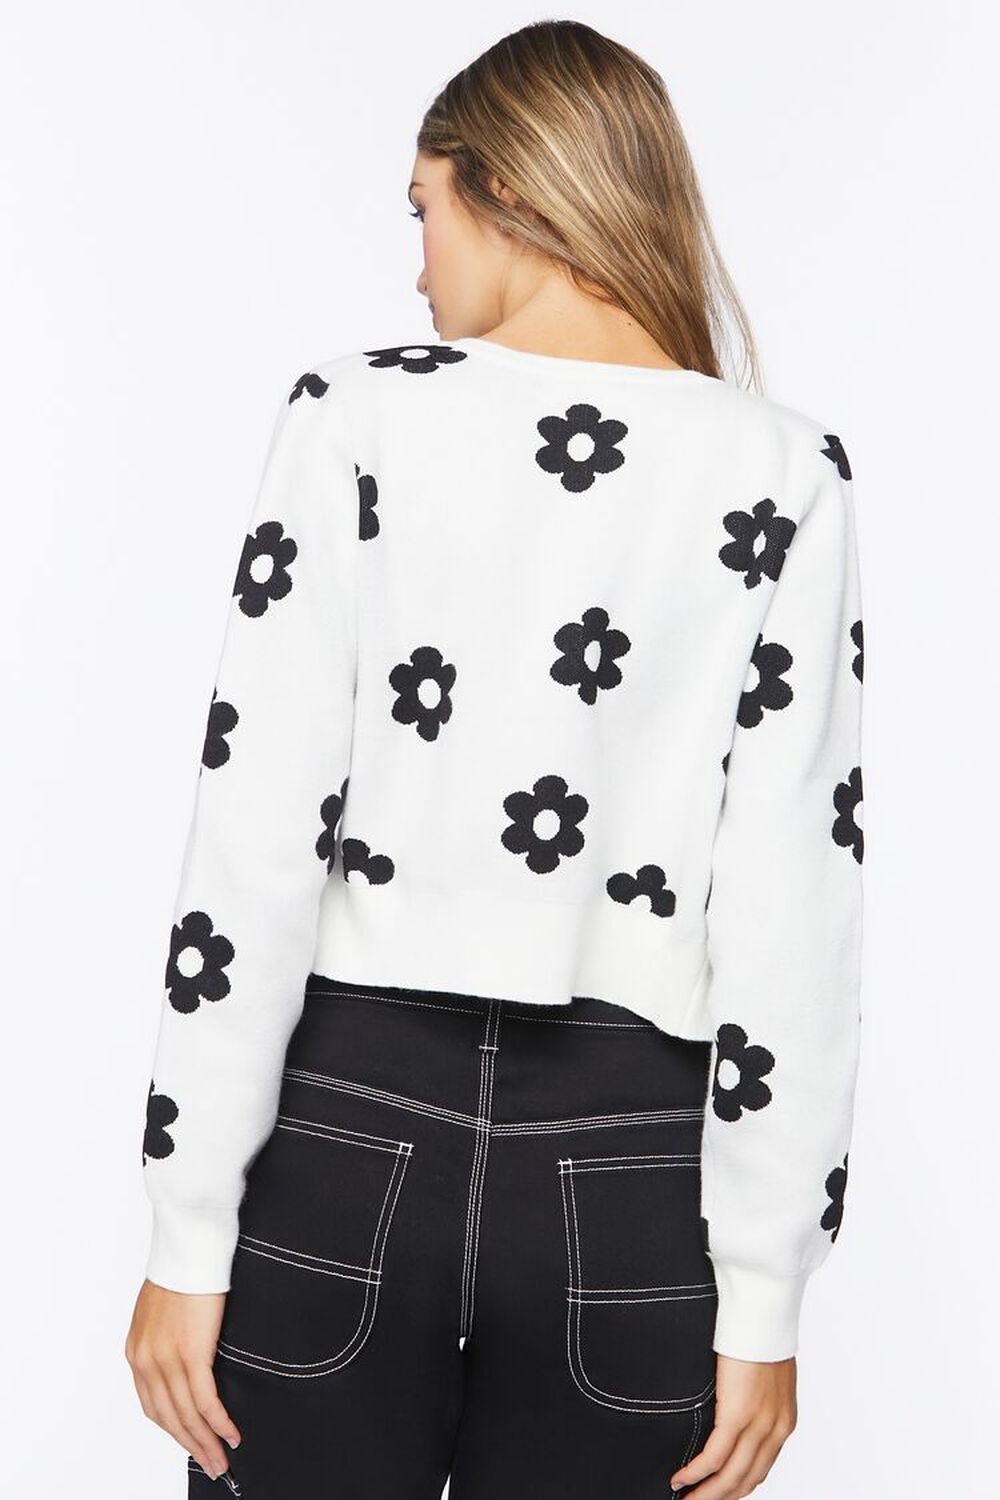 WHITE/BLACK Floral Print Cardigan Sweater, image 3